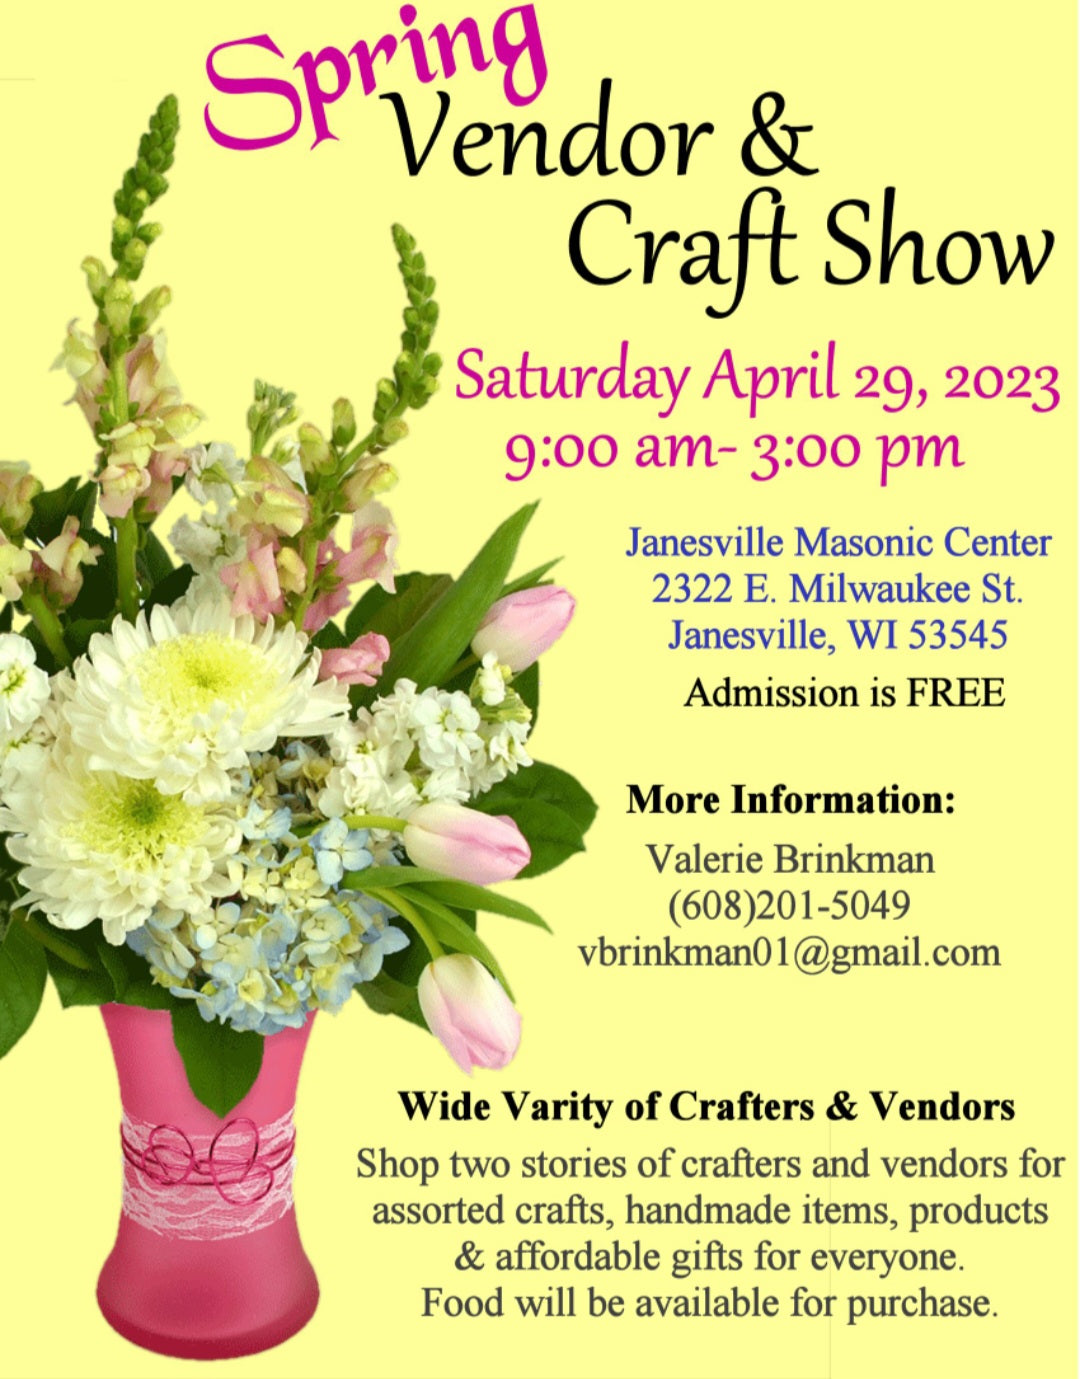 Spring Vendor & Craft show - Janesville April 29th